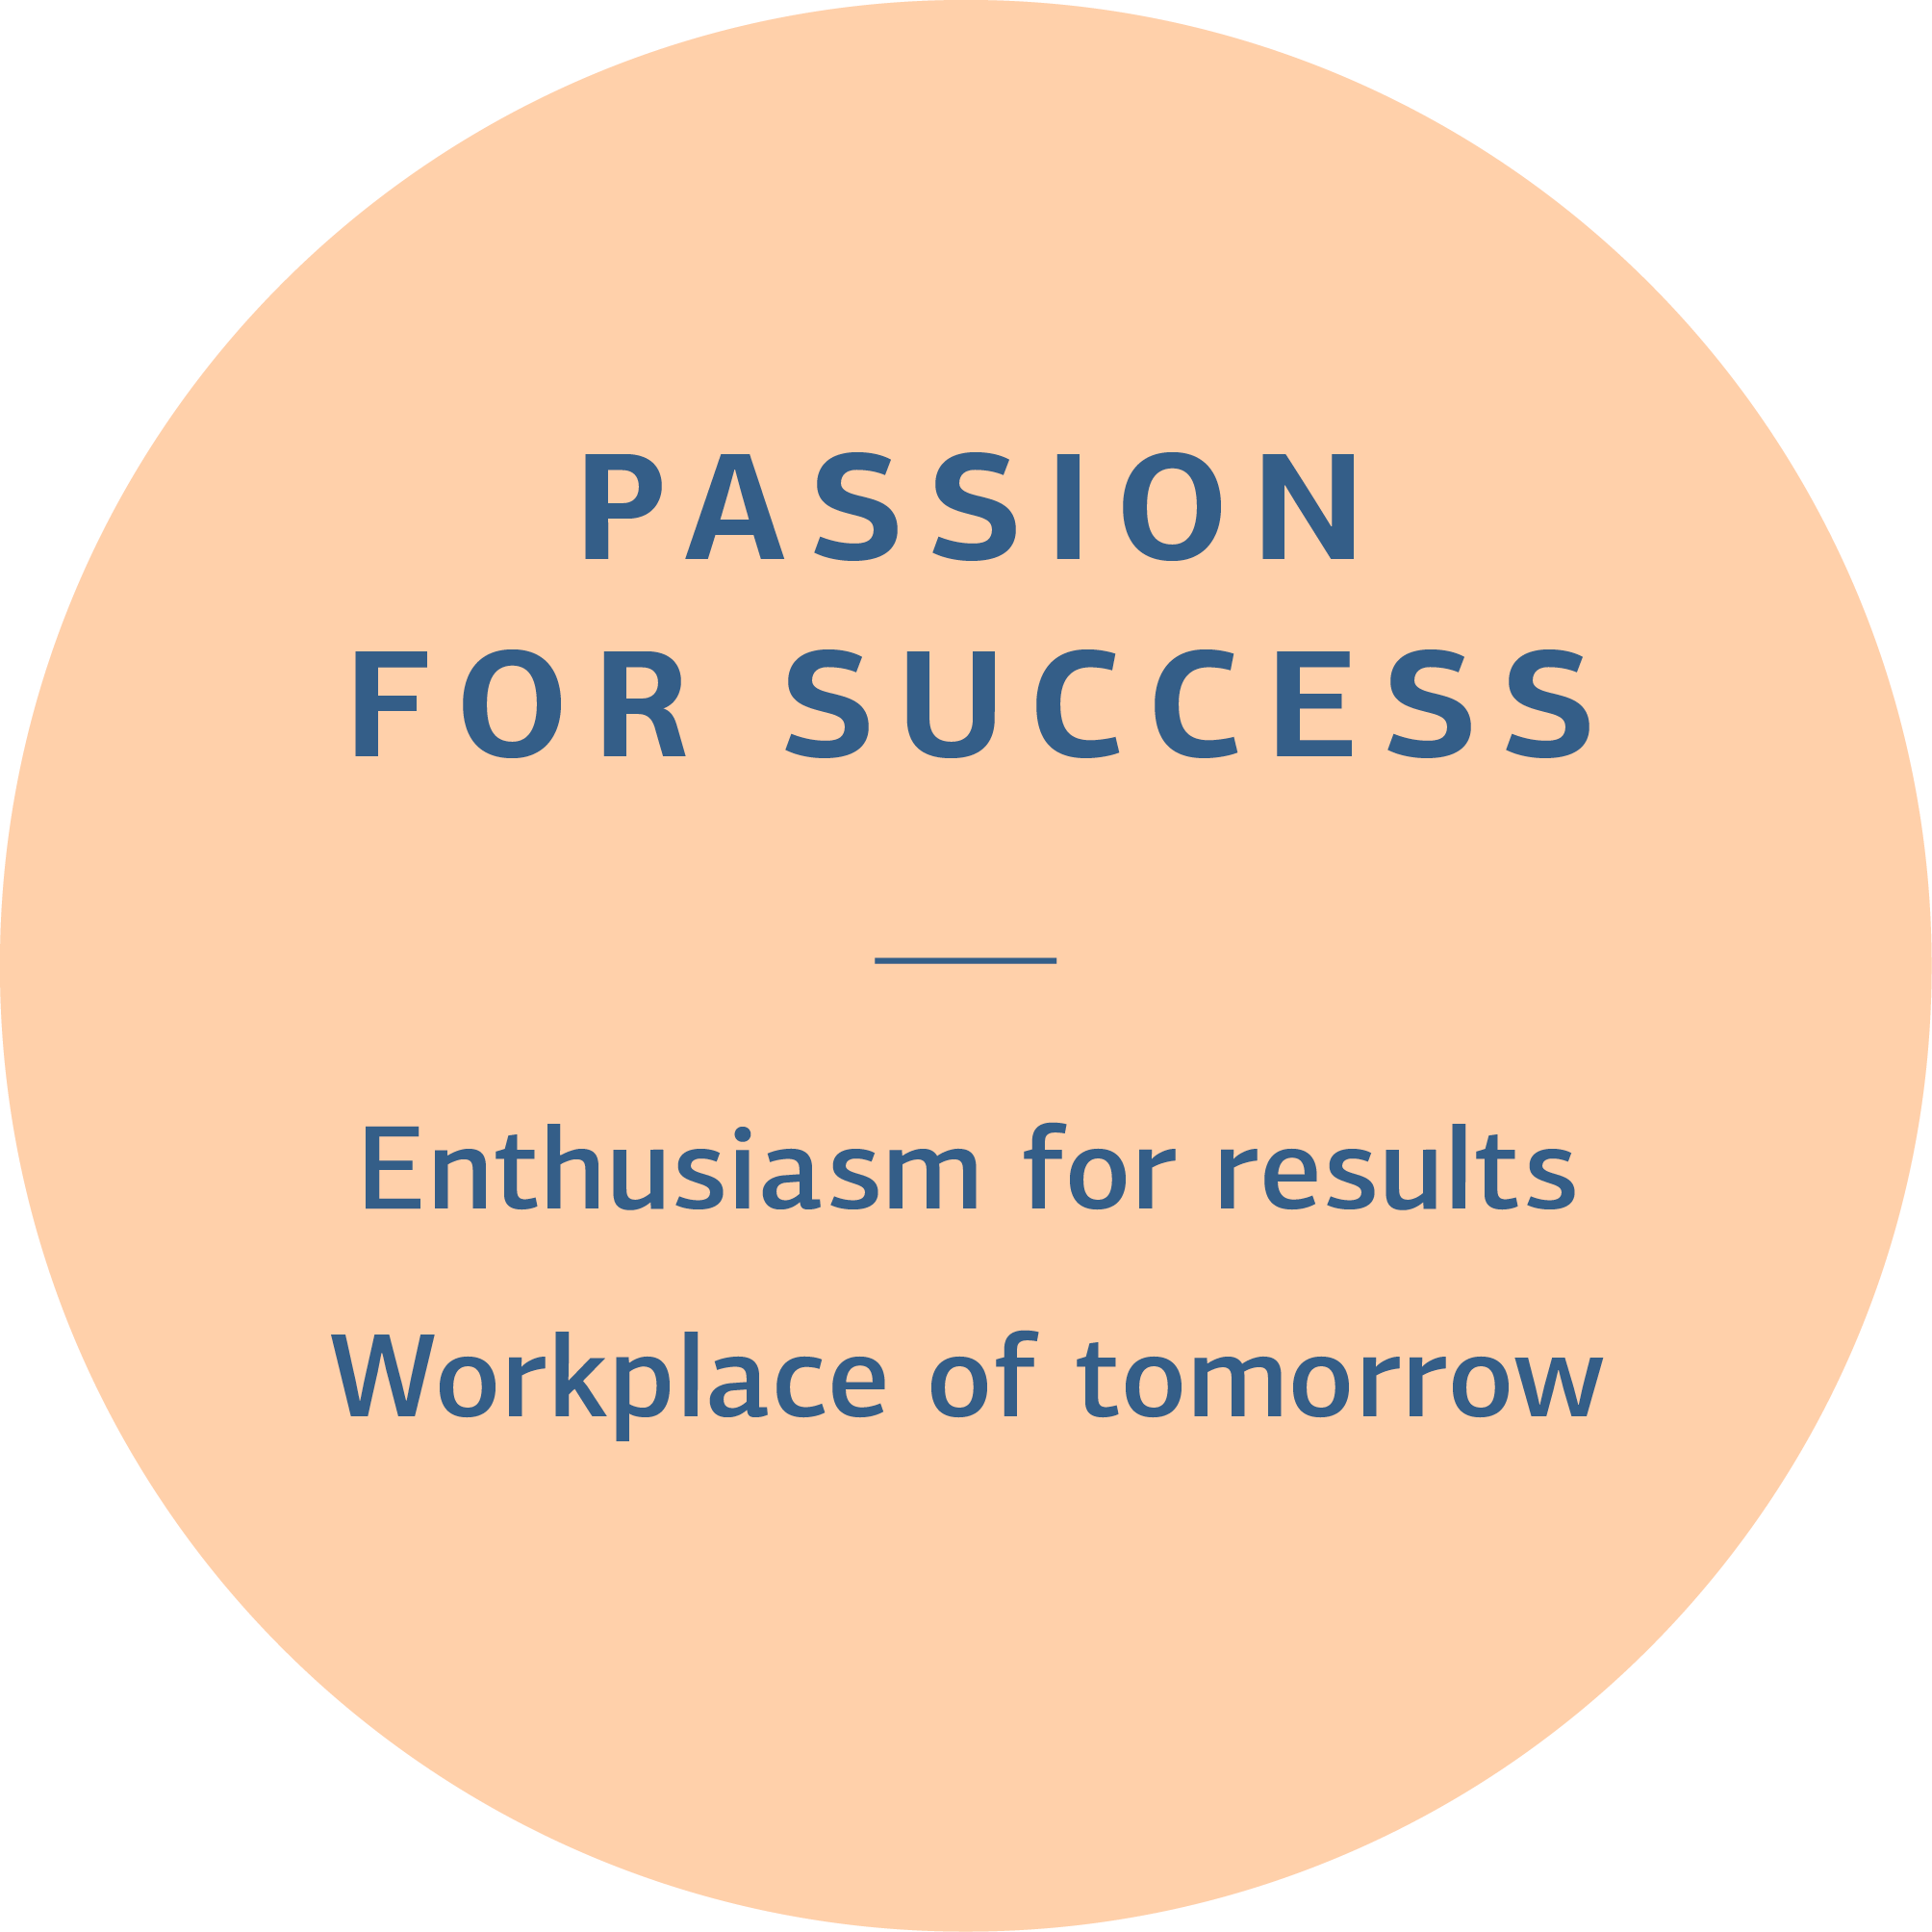 Pillar 3: Passion for success